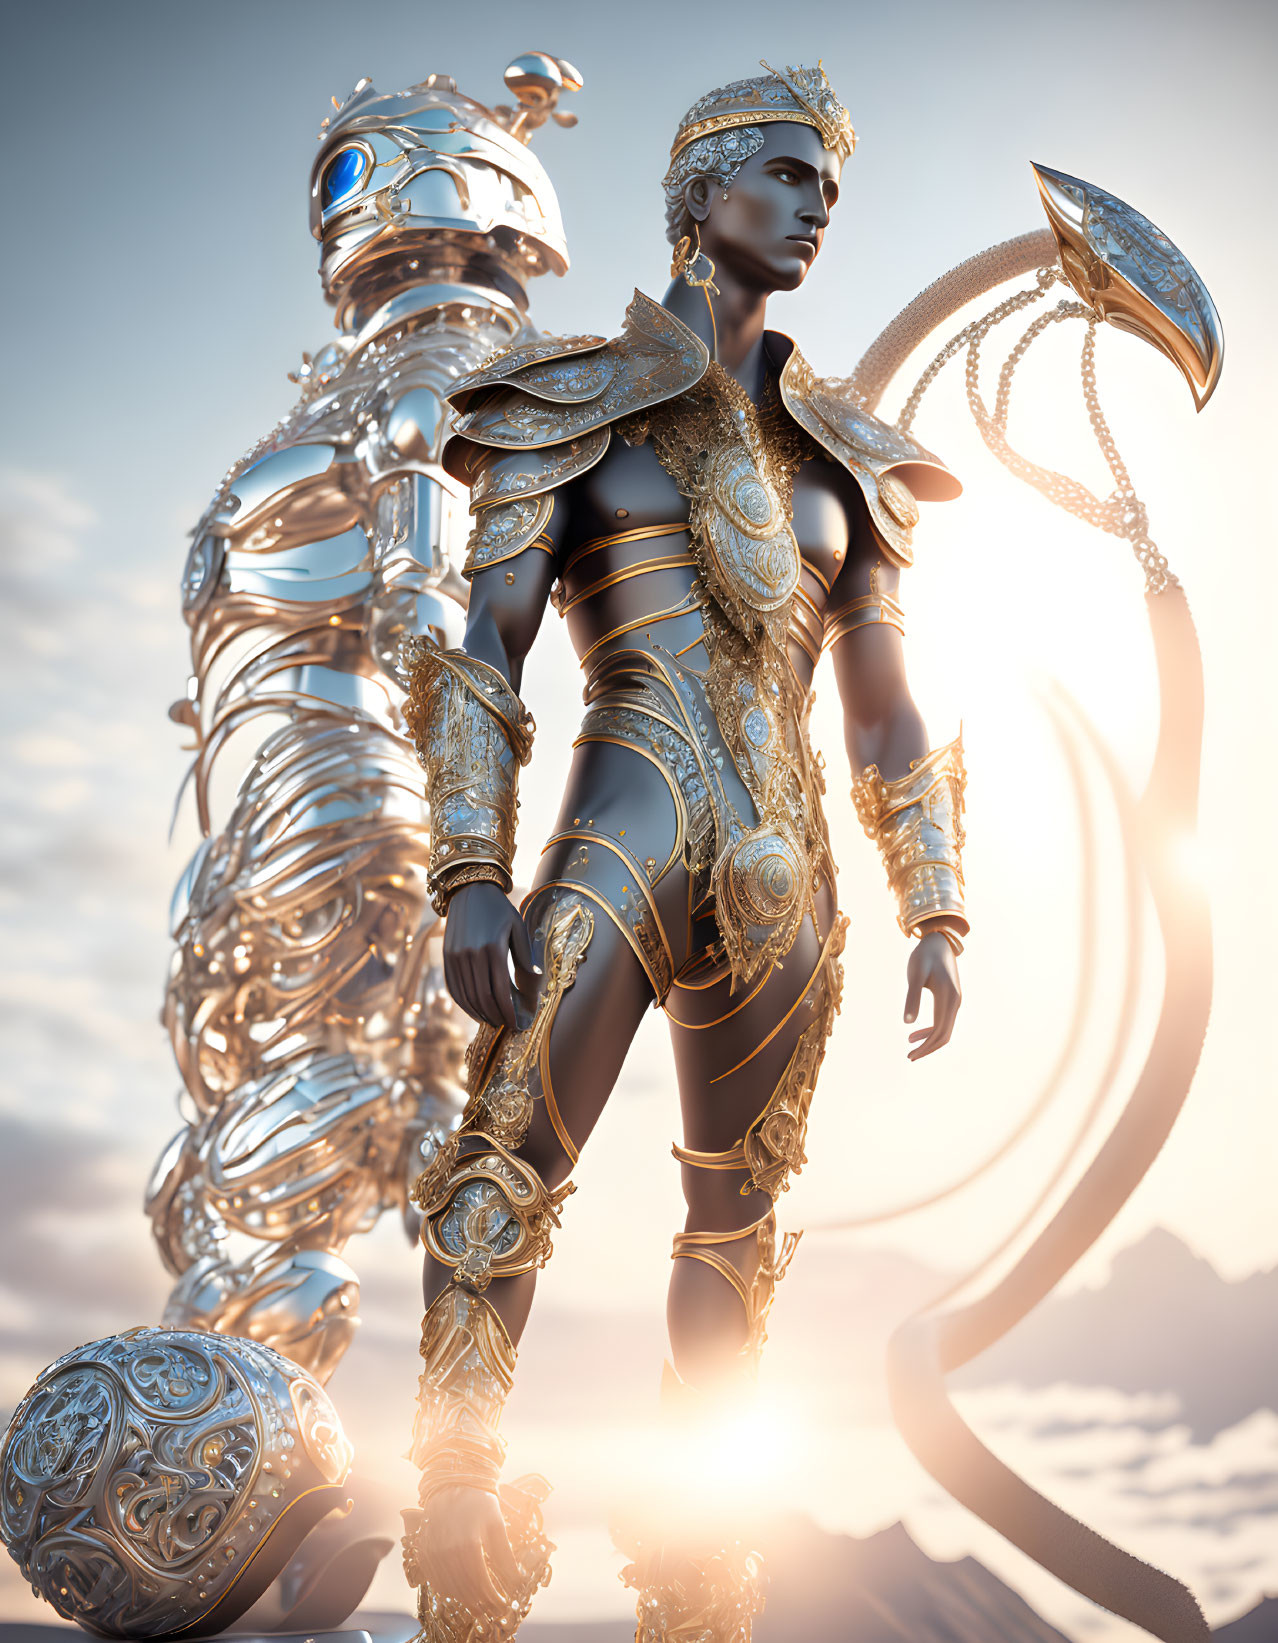 Futuristic warrior in golden armor against mountainous sky